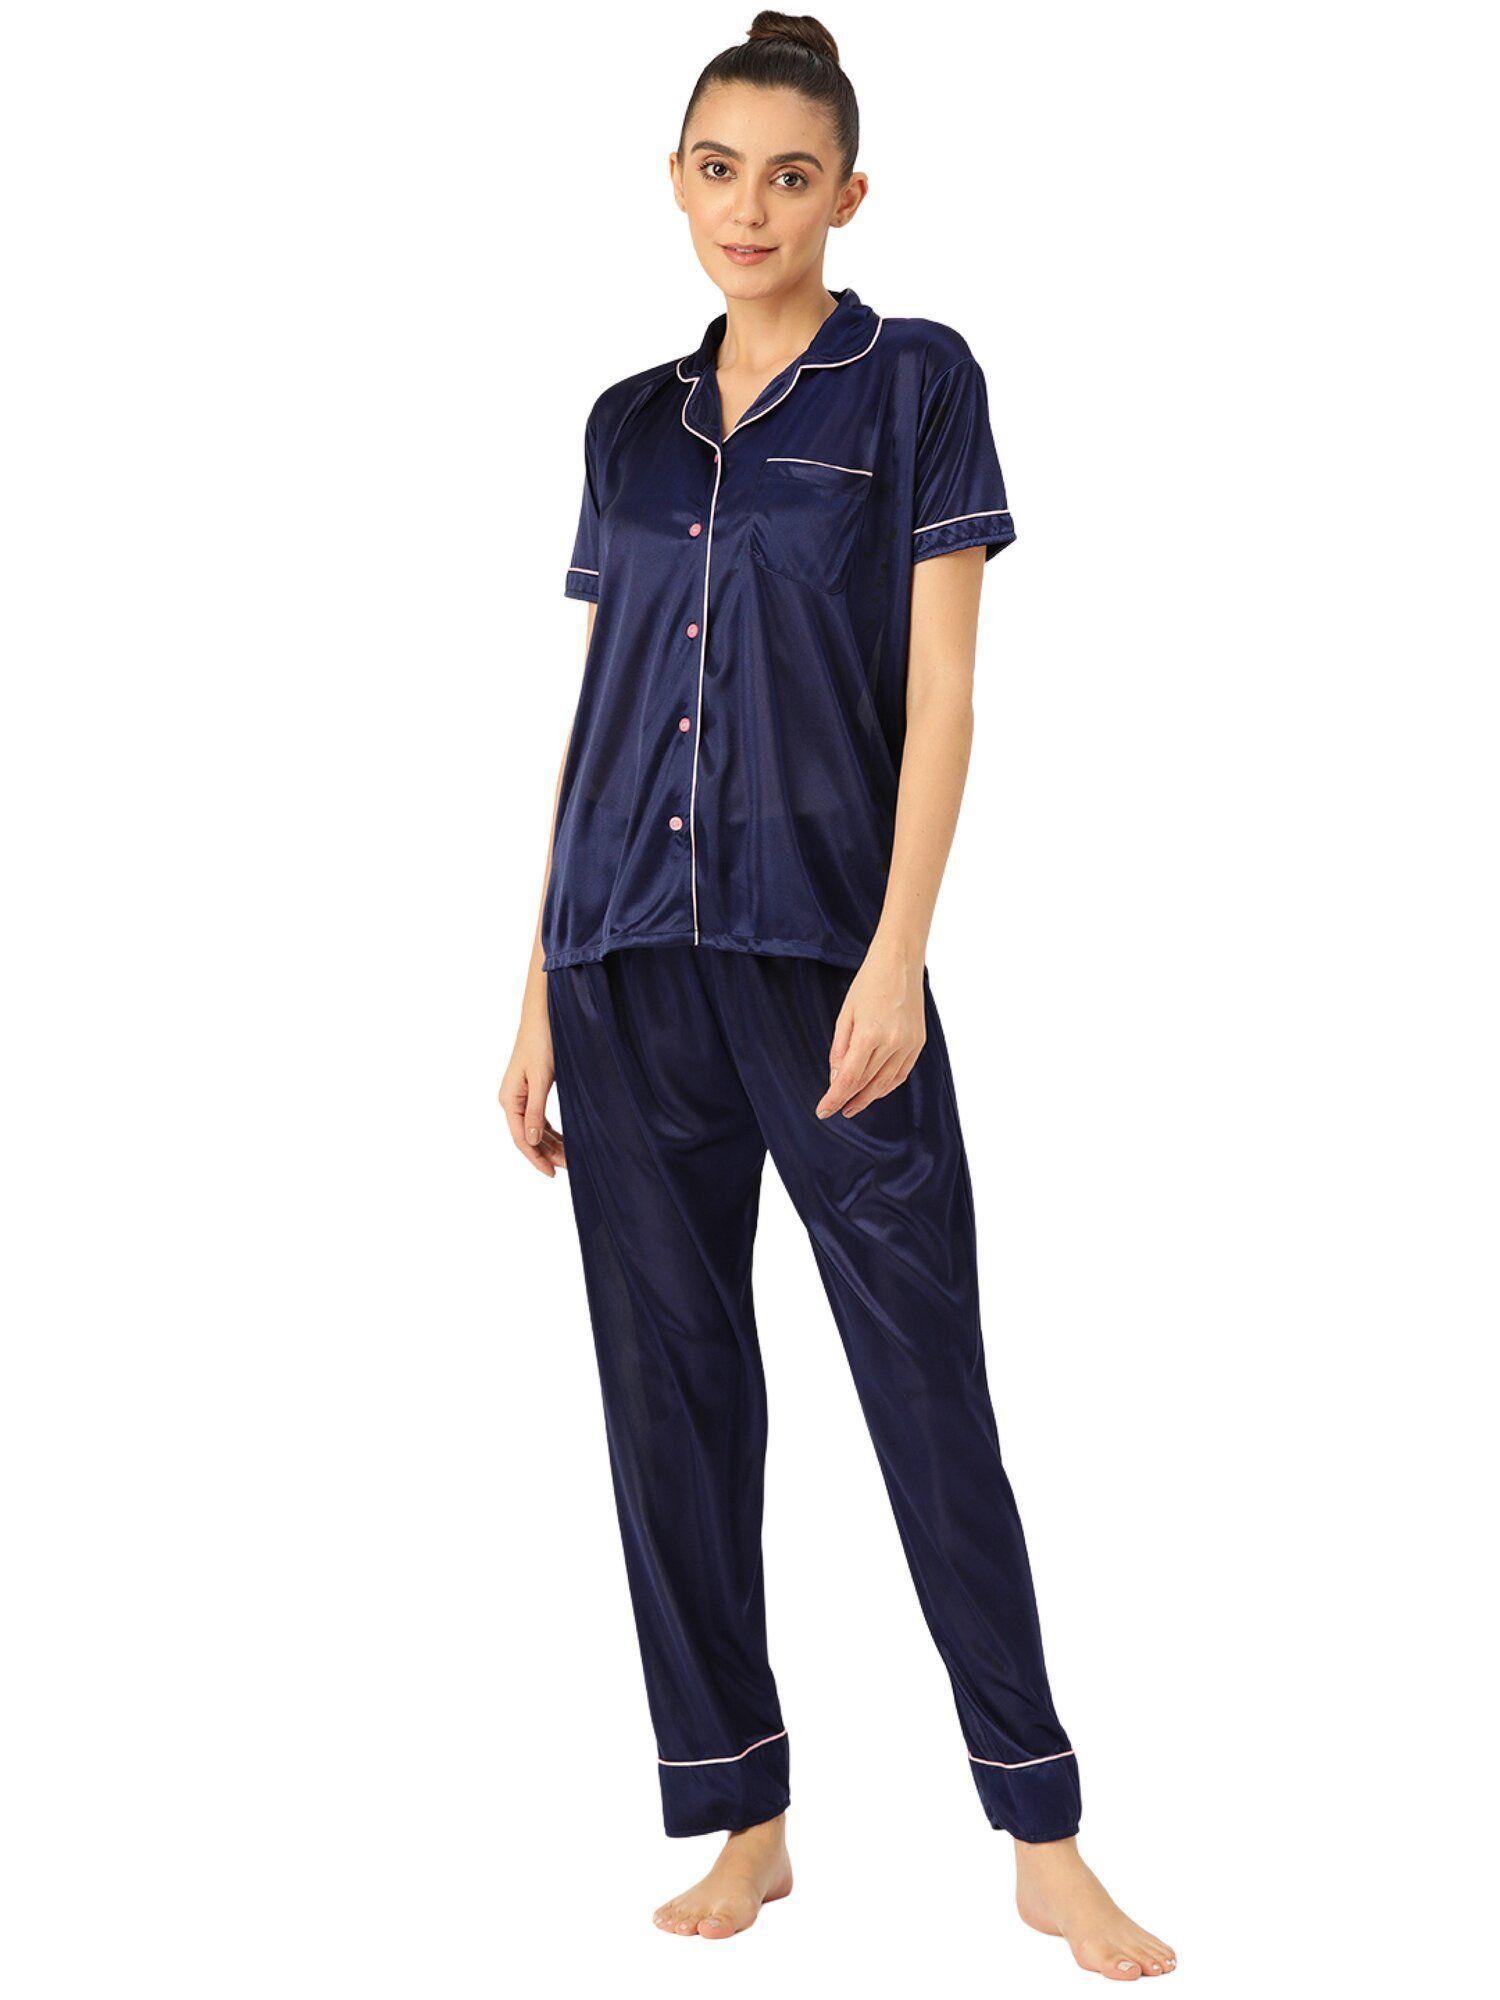 women satin nightwear sleepwear shirt & pyjama set, kl017 - navy blue